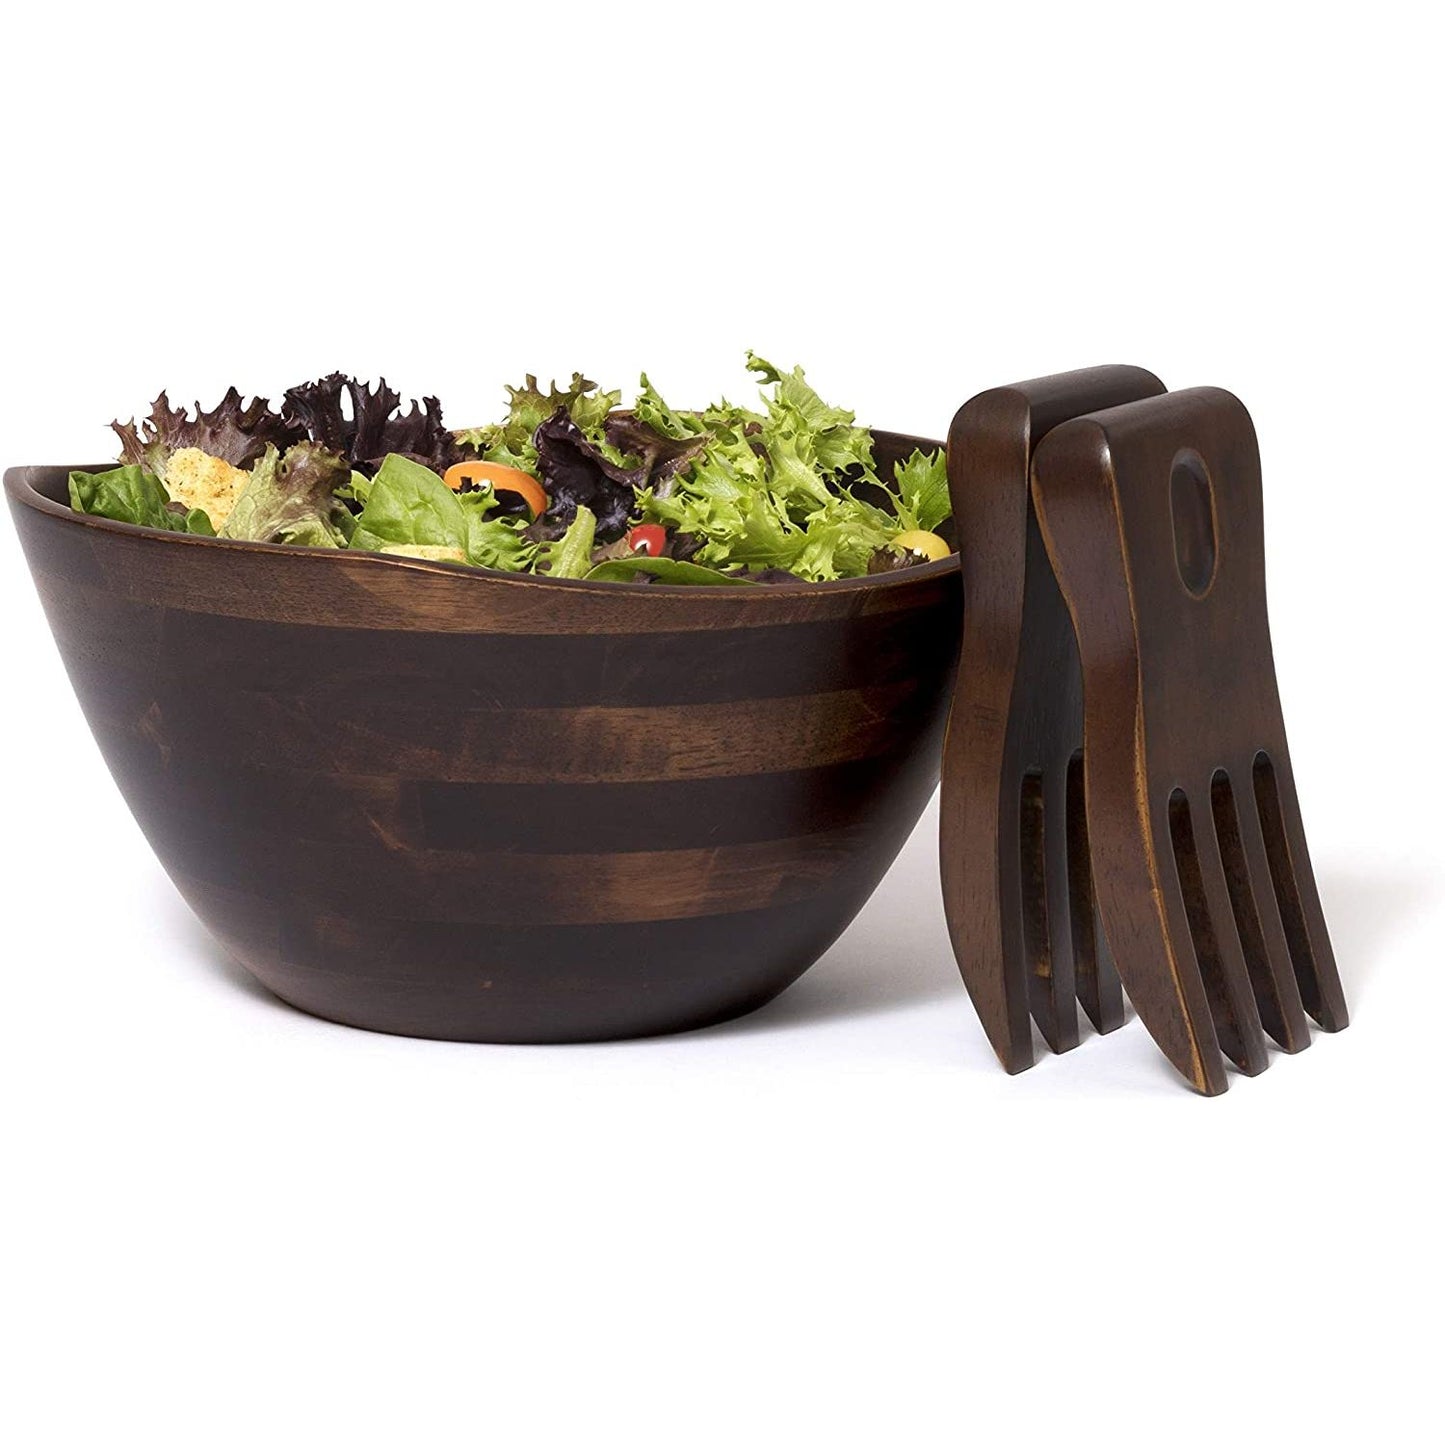 Lipper International Walnut Finish Large Wavy Rim Bowl with Salad Hands, Brown